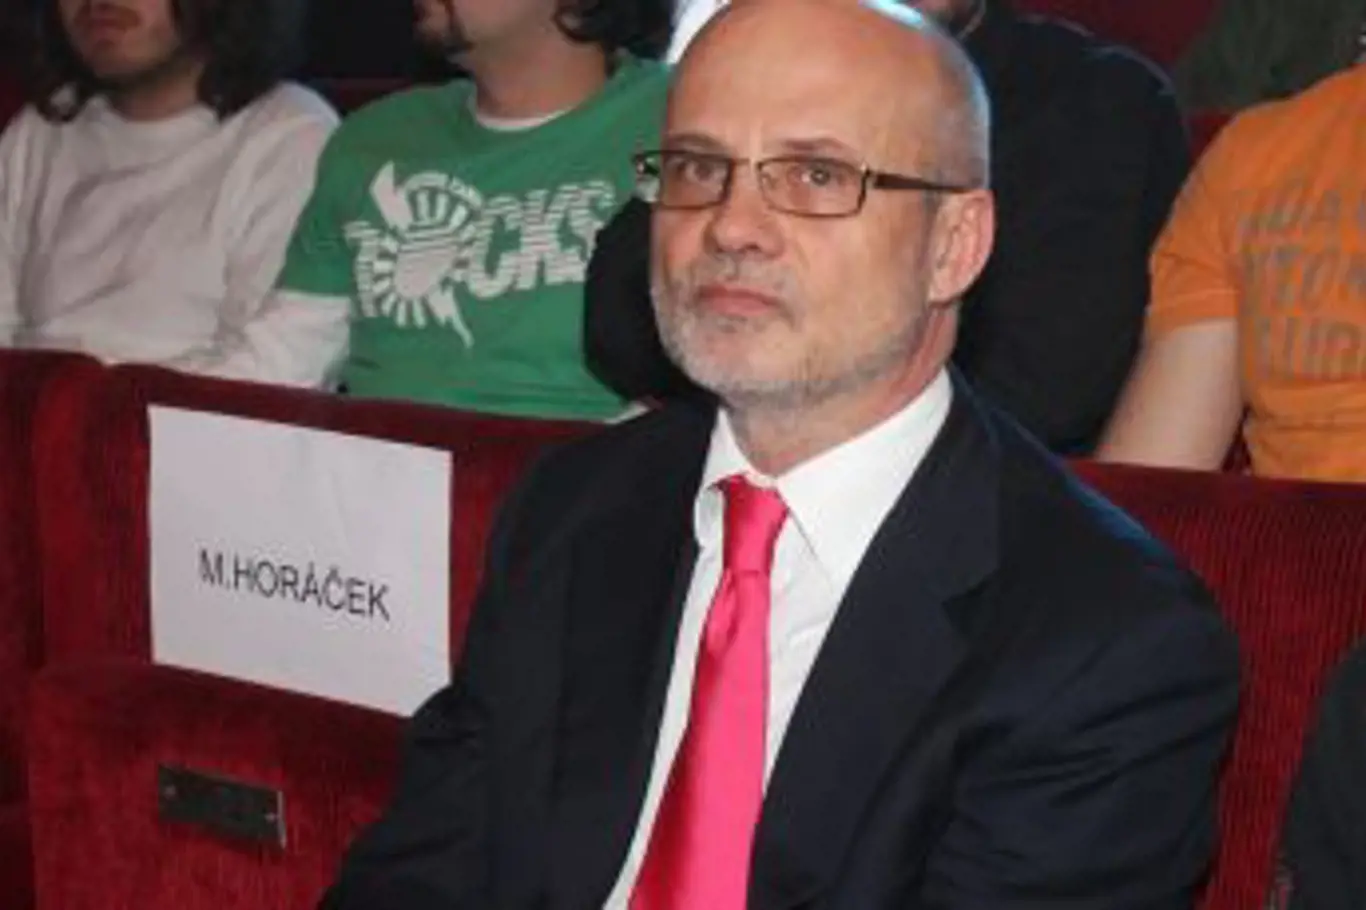 Michal Horáček